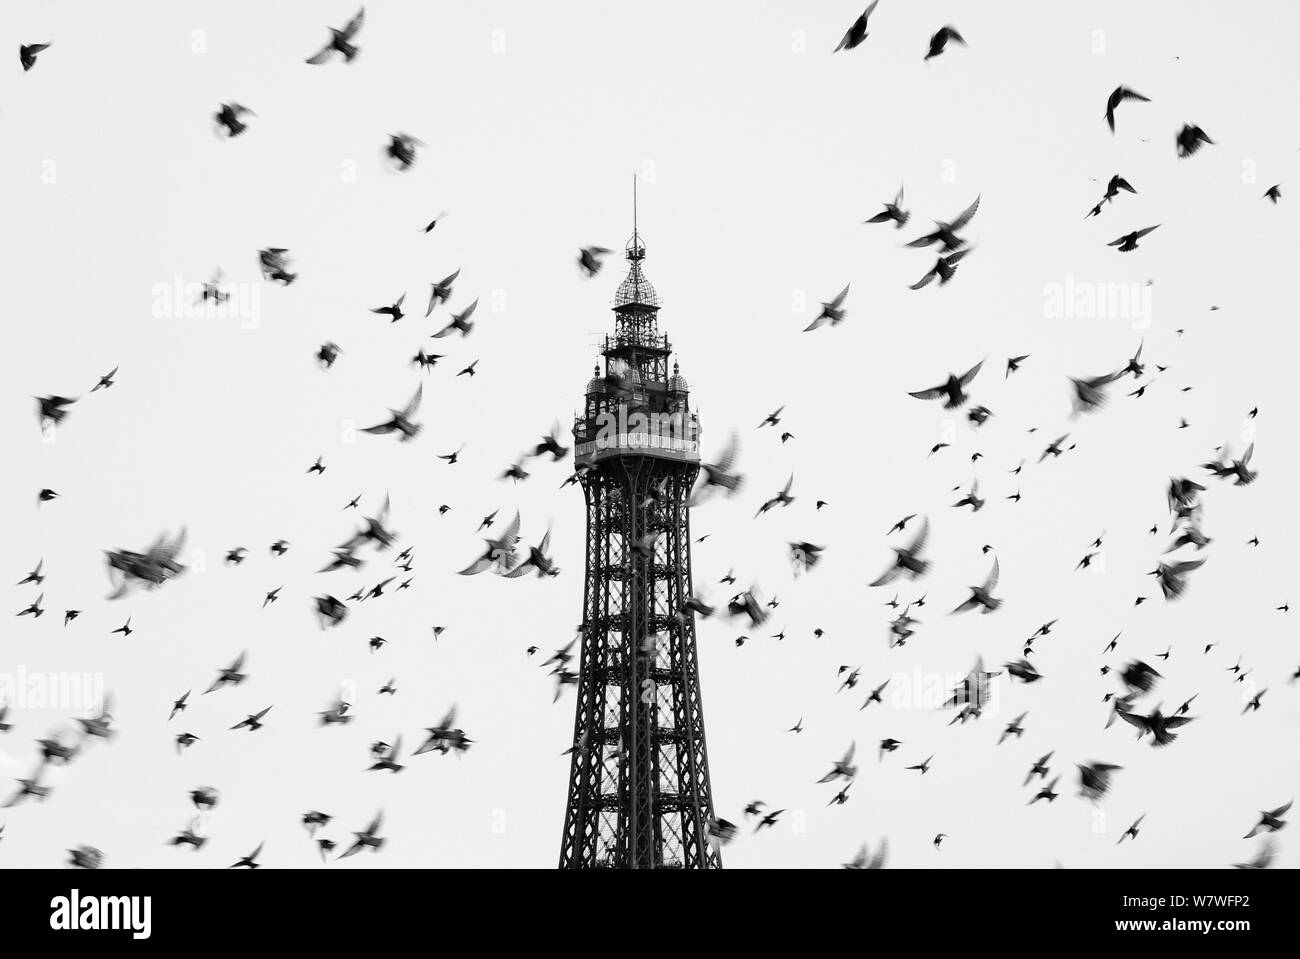 A flock of Starlings (Sturnus vulgaris) flying in front of the Blackpool Tower, England, UK, September 2010. Stock Photo